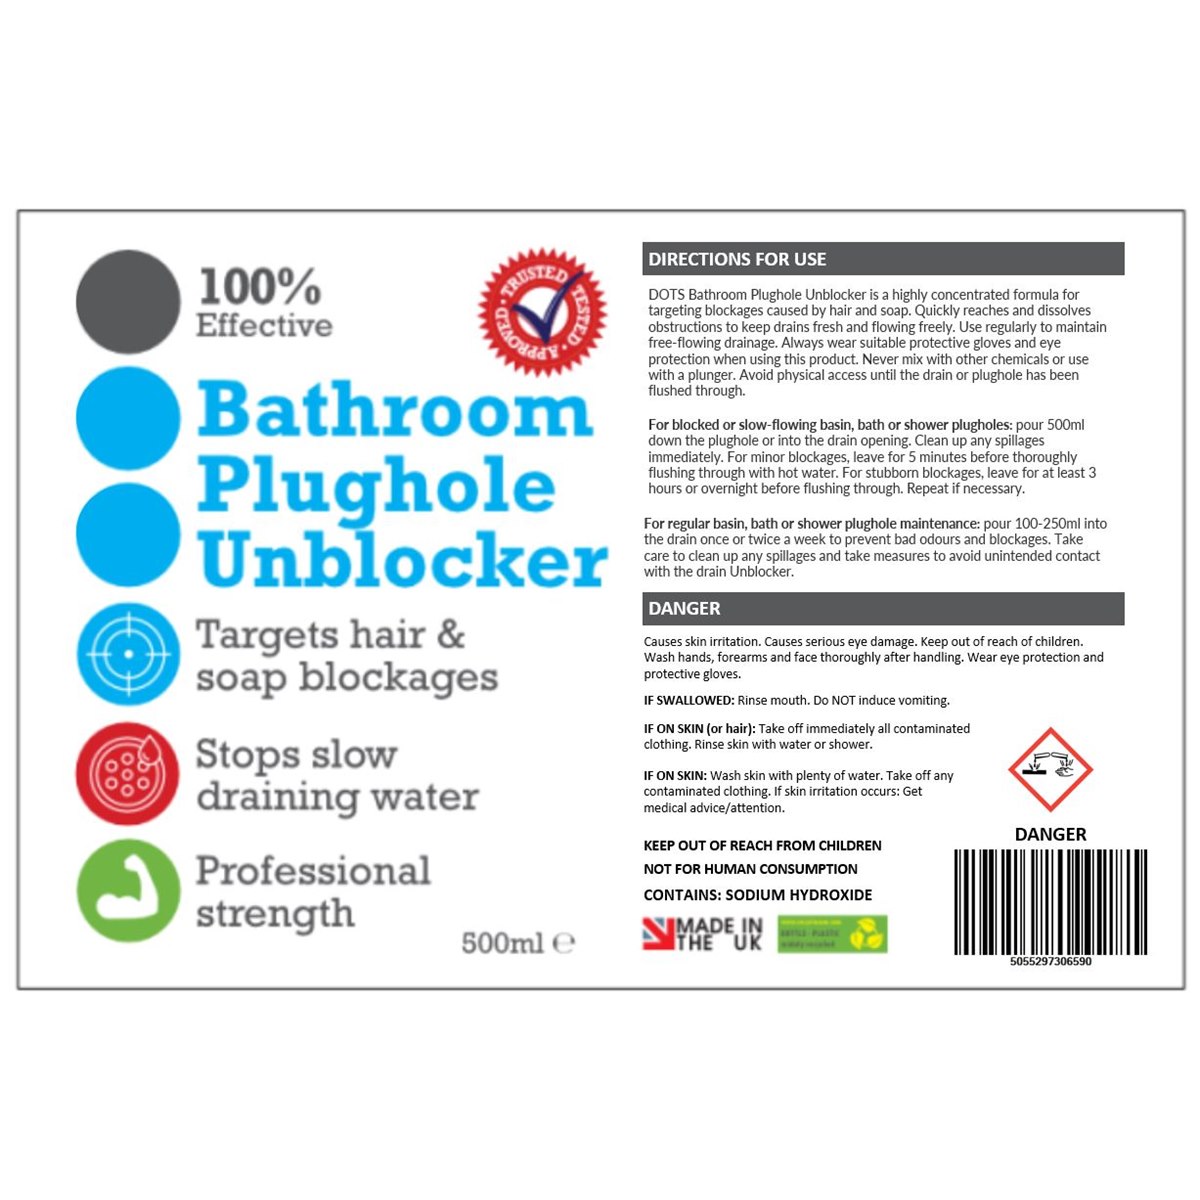 How-to-use-bathroom-plughole-unblocker